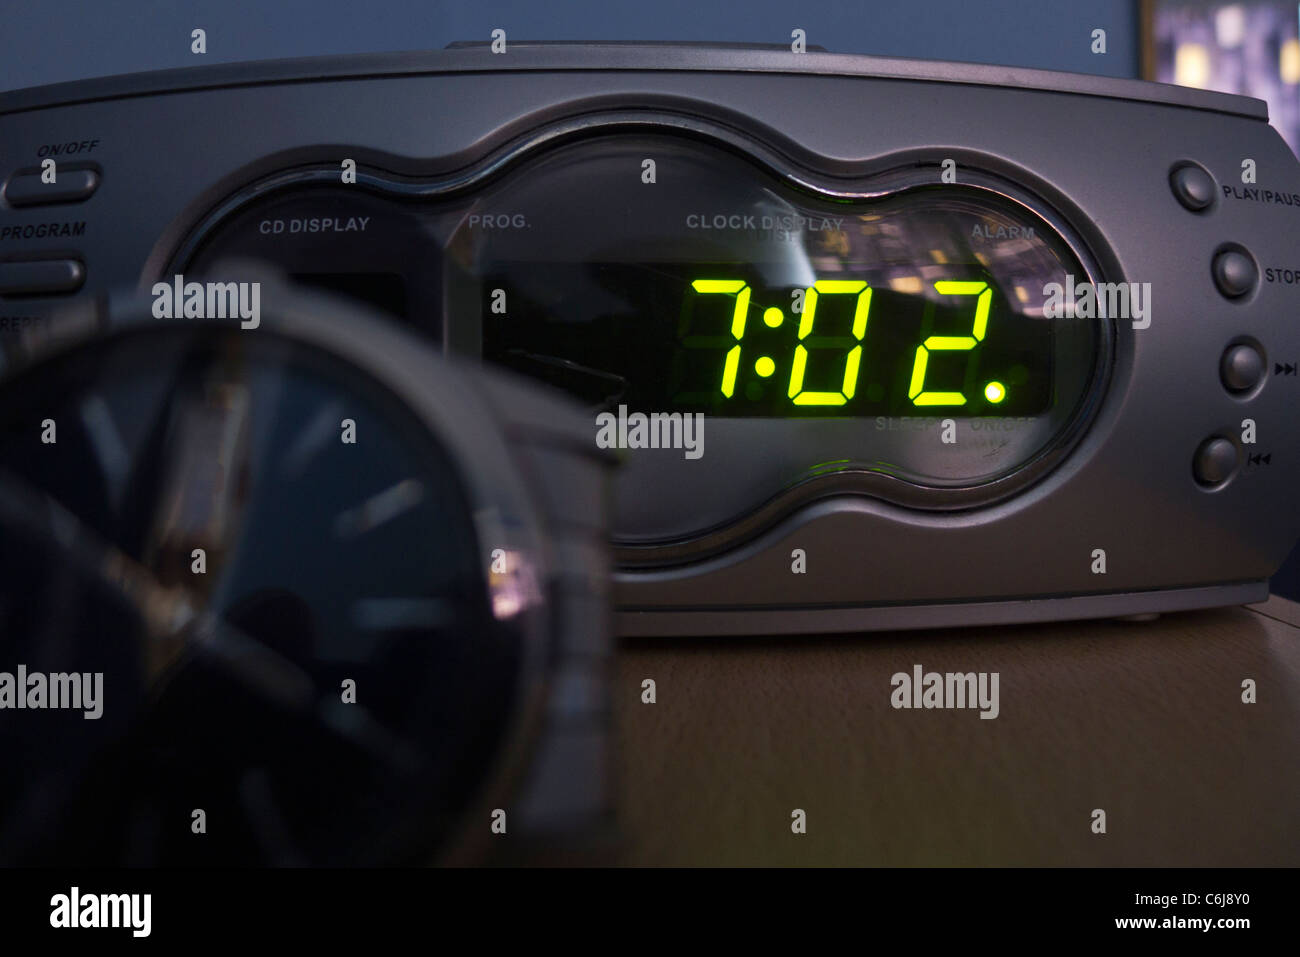 Alarm Clock Radio Showing The Time 7 02 Am Stock Photo Alamy